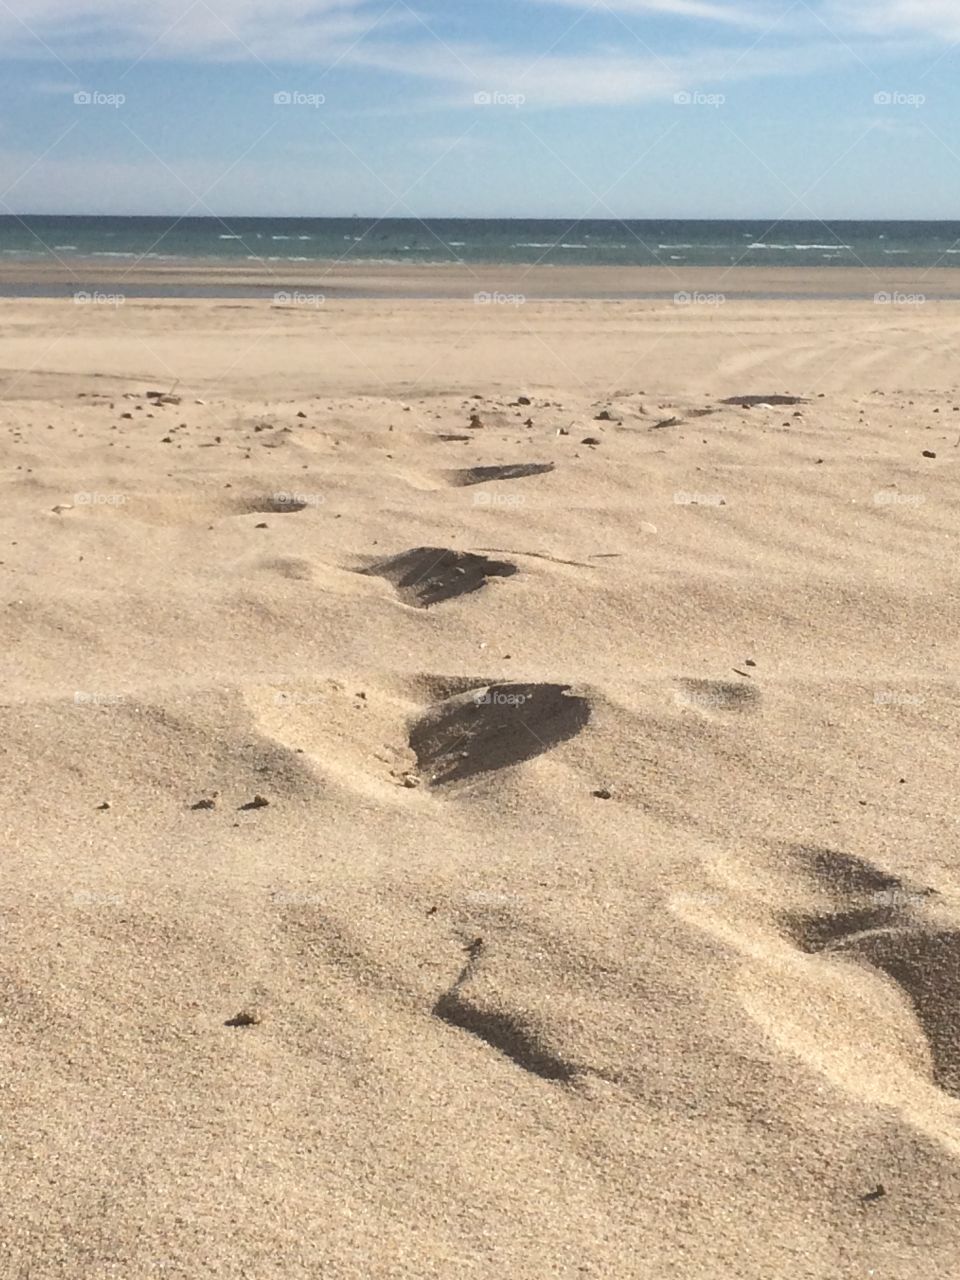 Peñasco beach, sand and dunes 